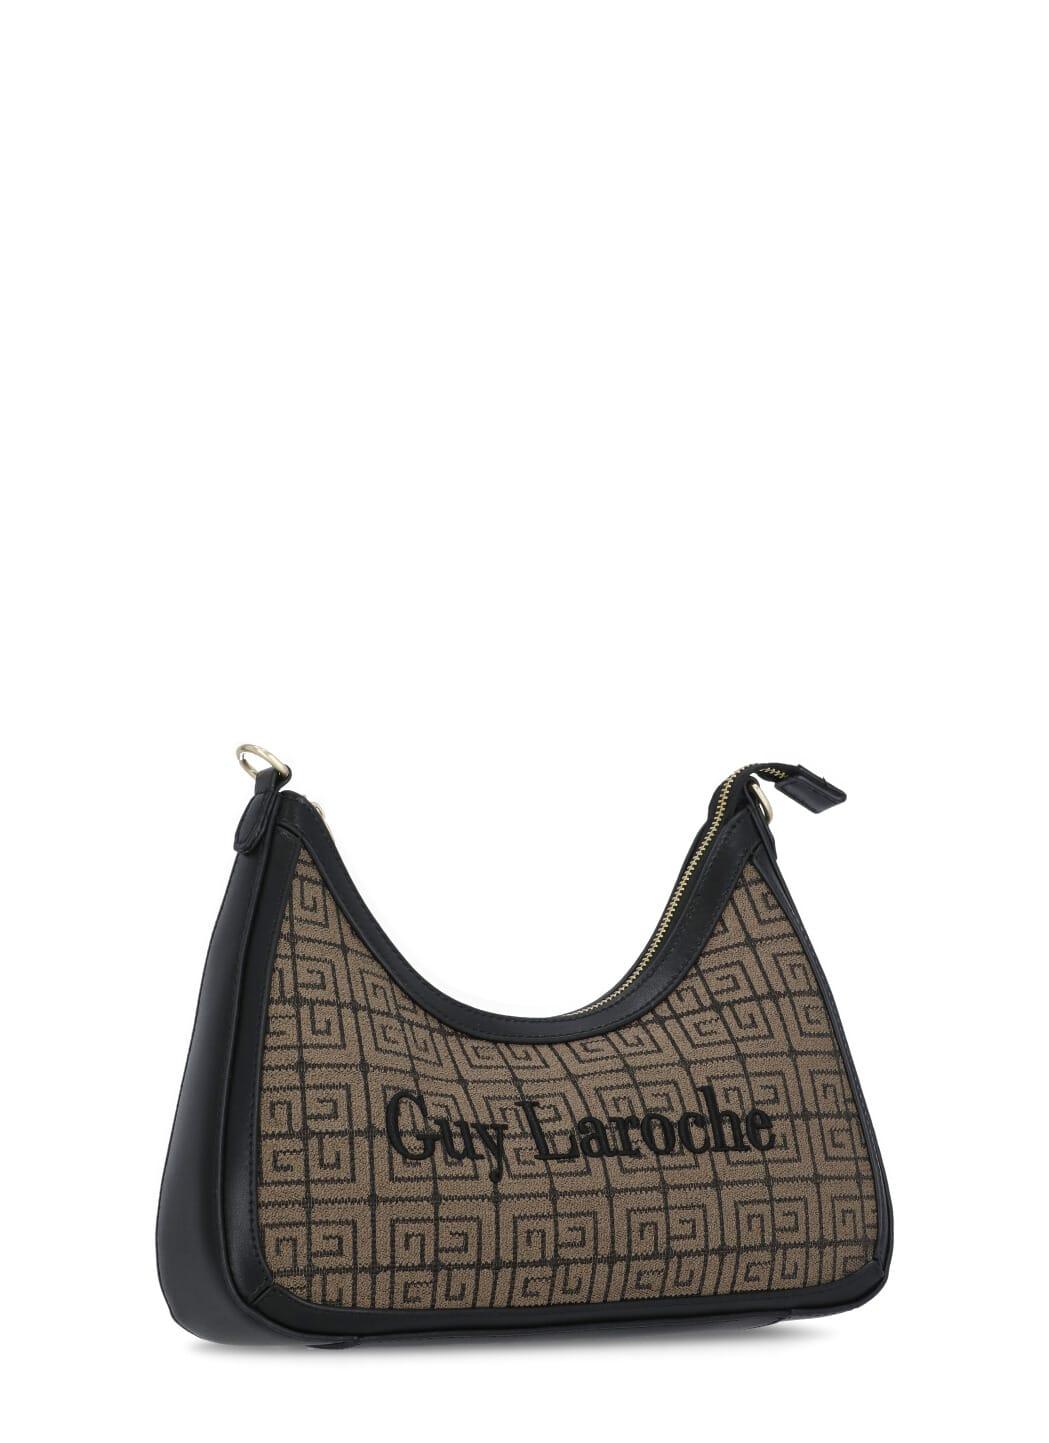 Vintage Guy Laroche Bag Handbag 